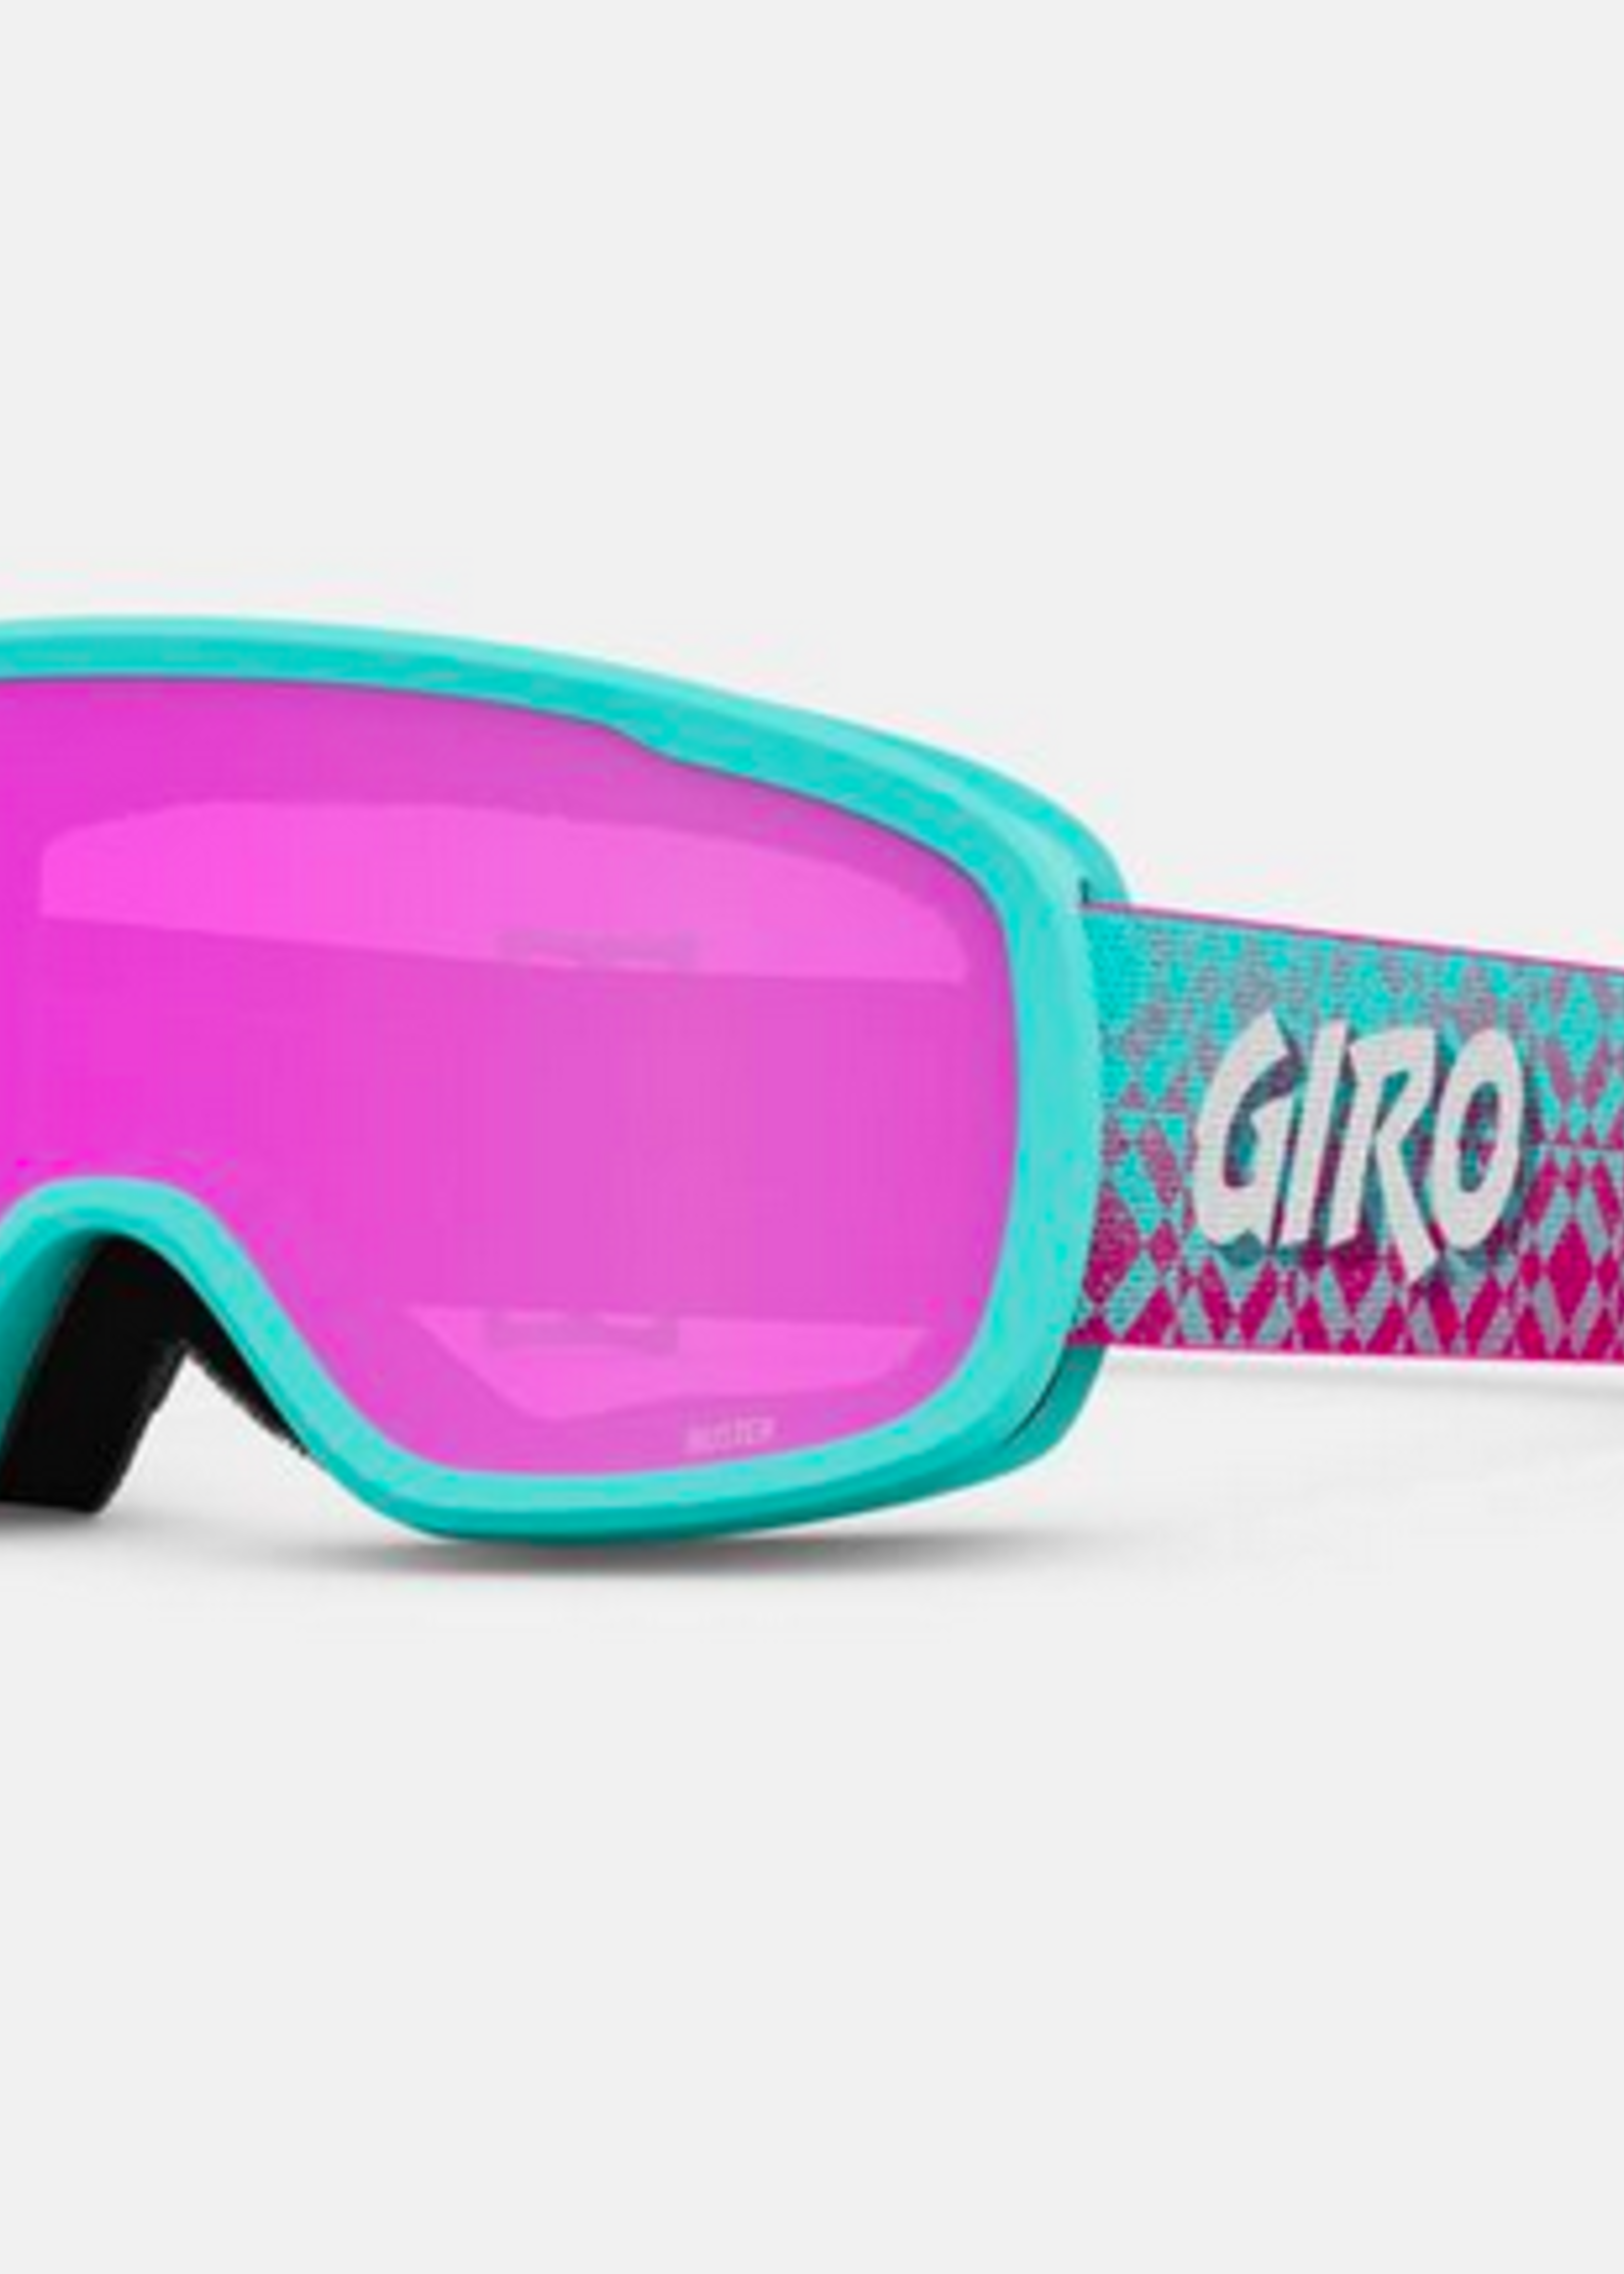 Giro Buster Goggles